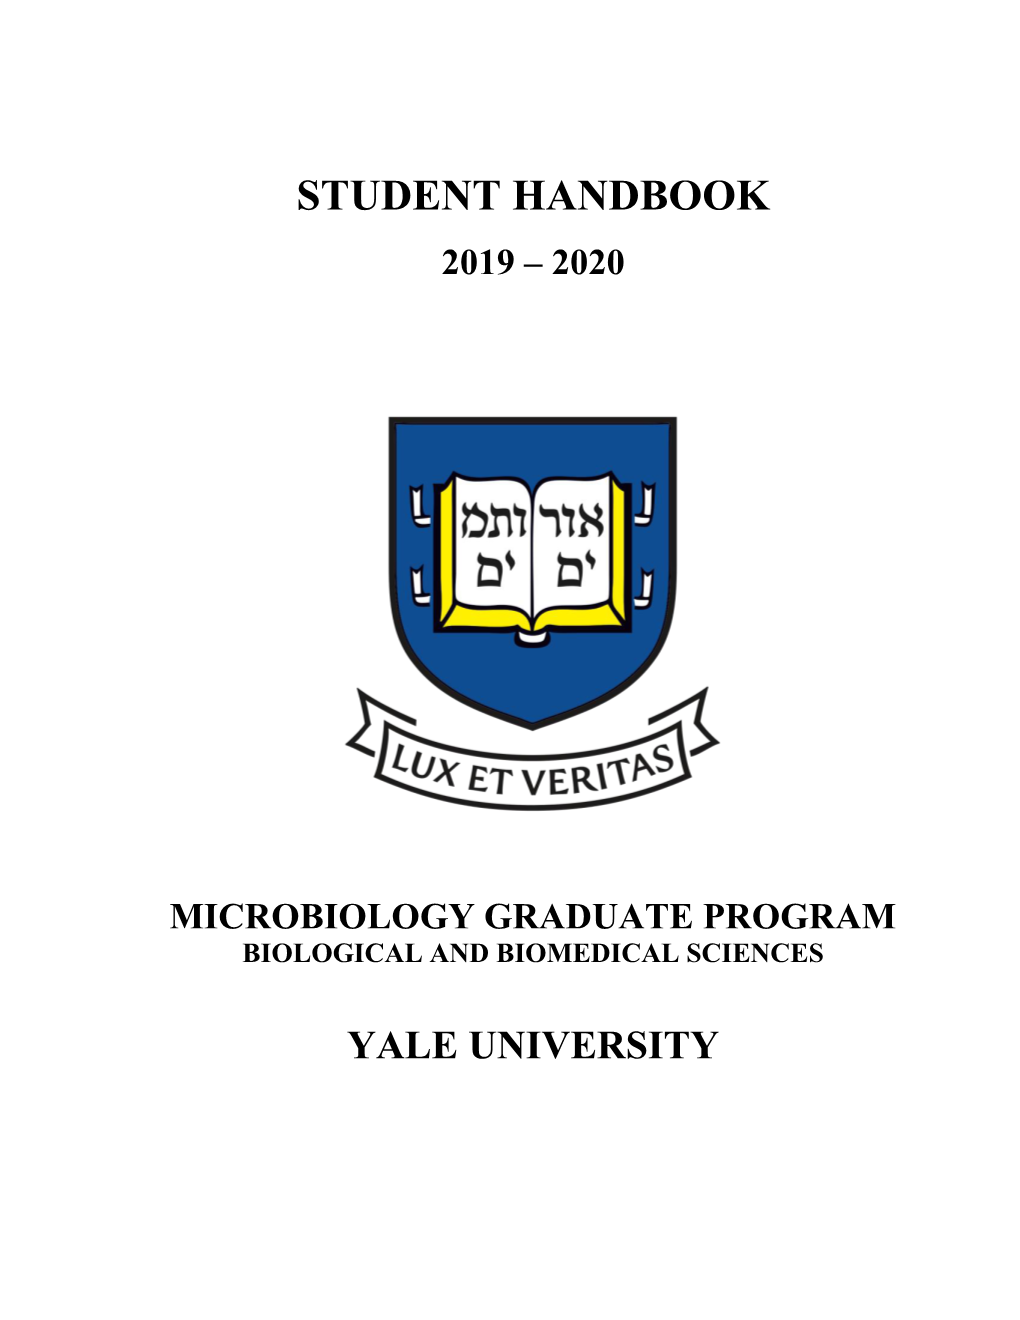 Microbiology Student Handbook